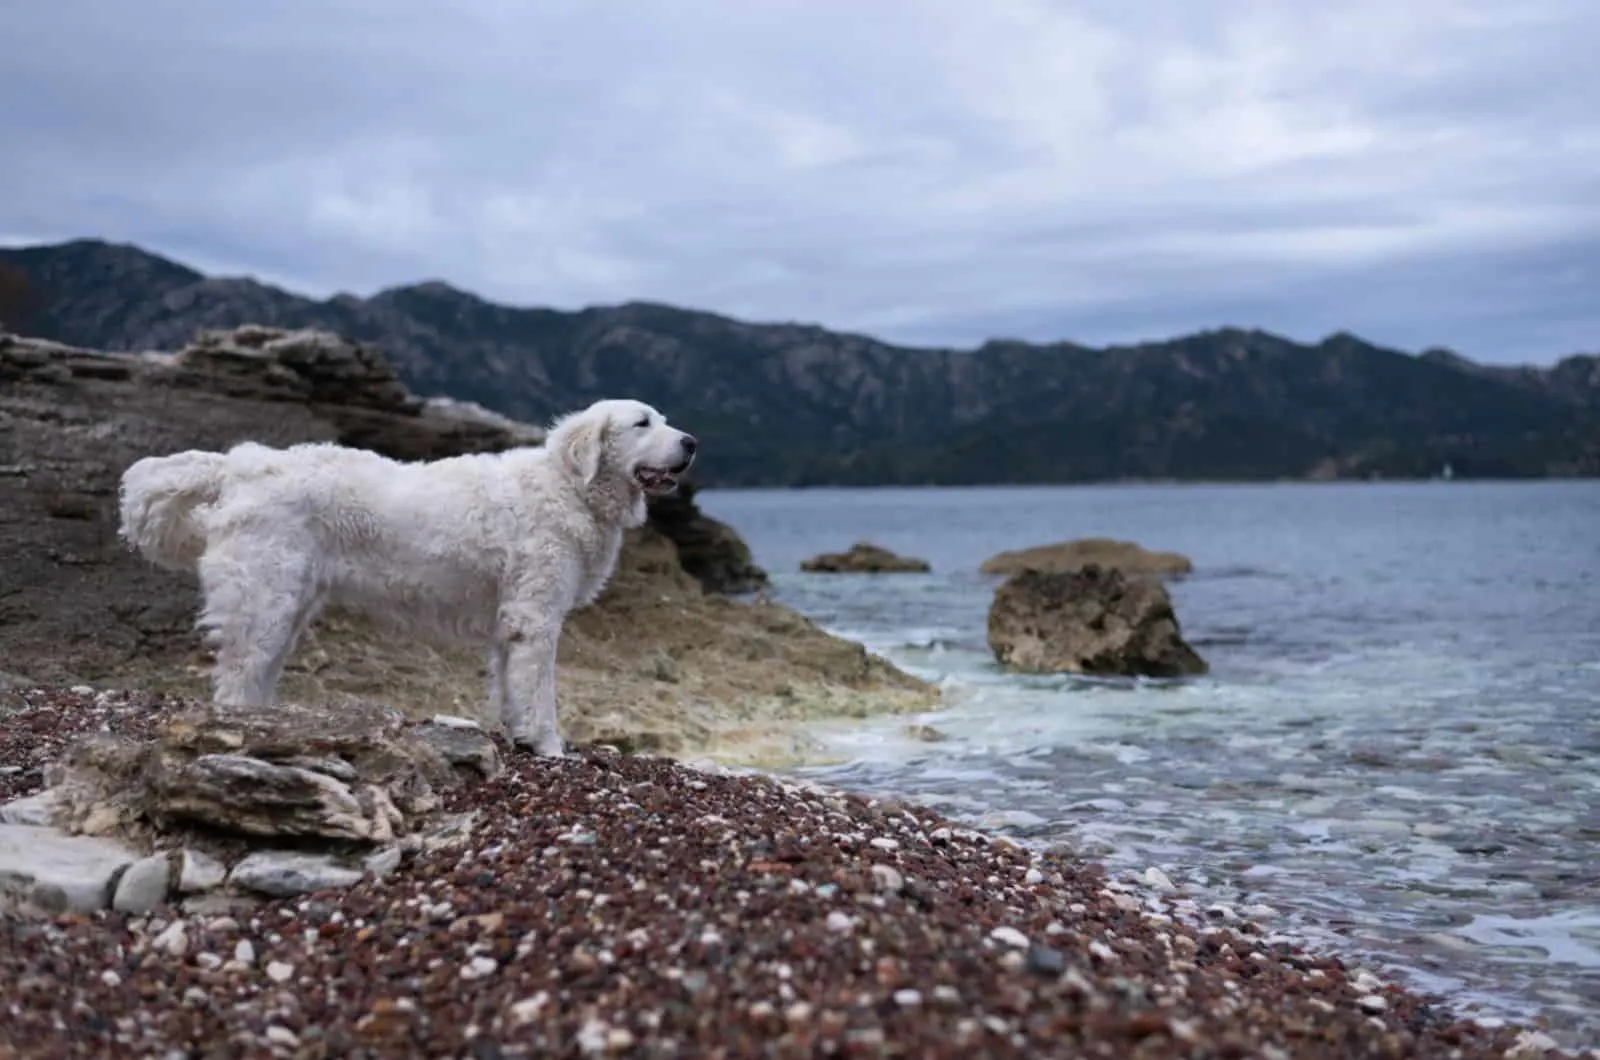 kuvasz dog standing near the sea